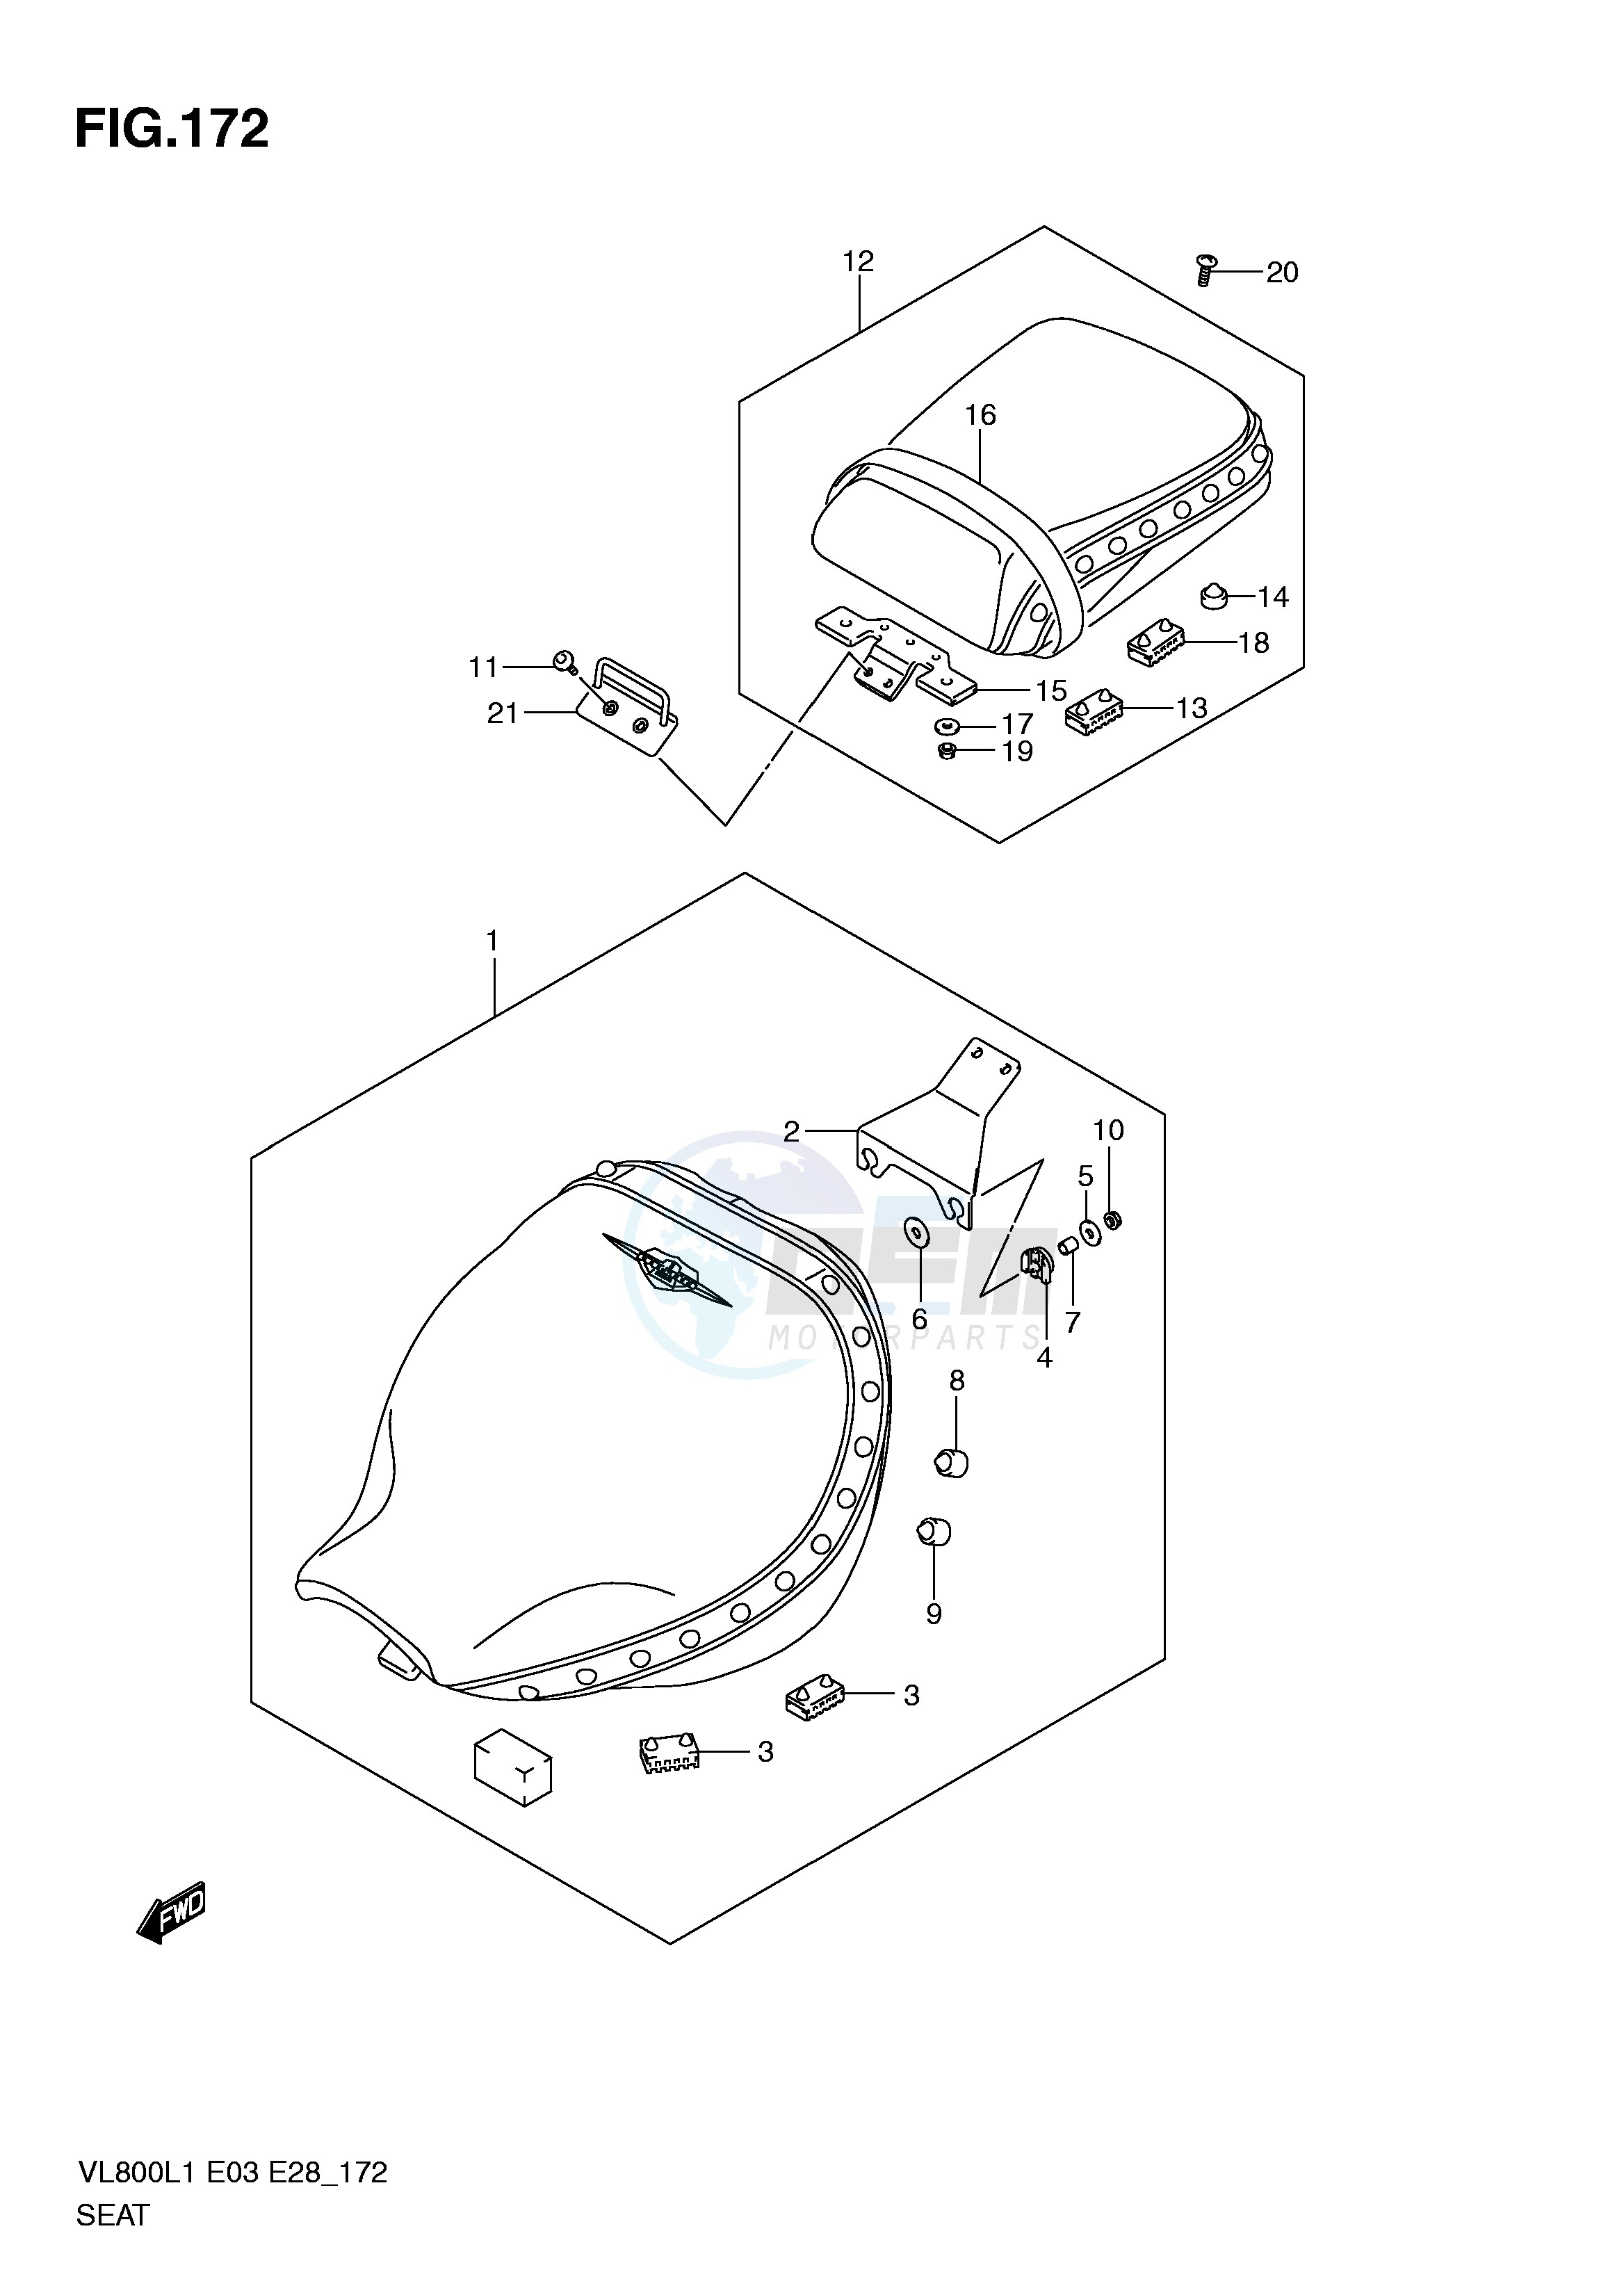 SEAT (VL800TL1 E33) blueprint